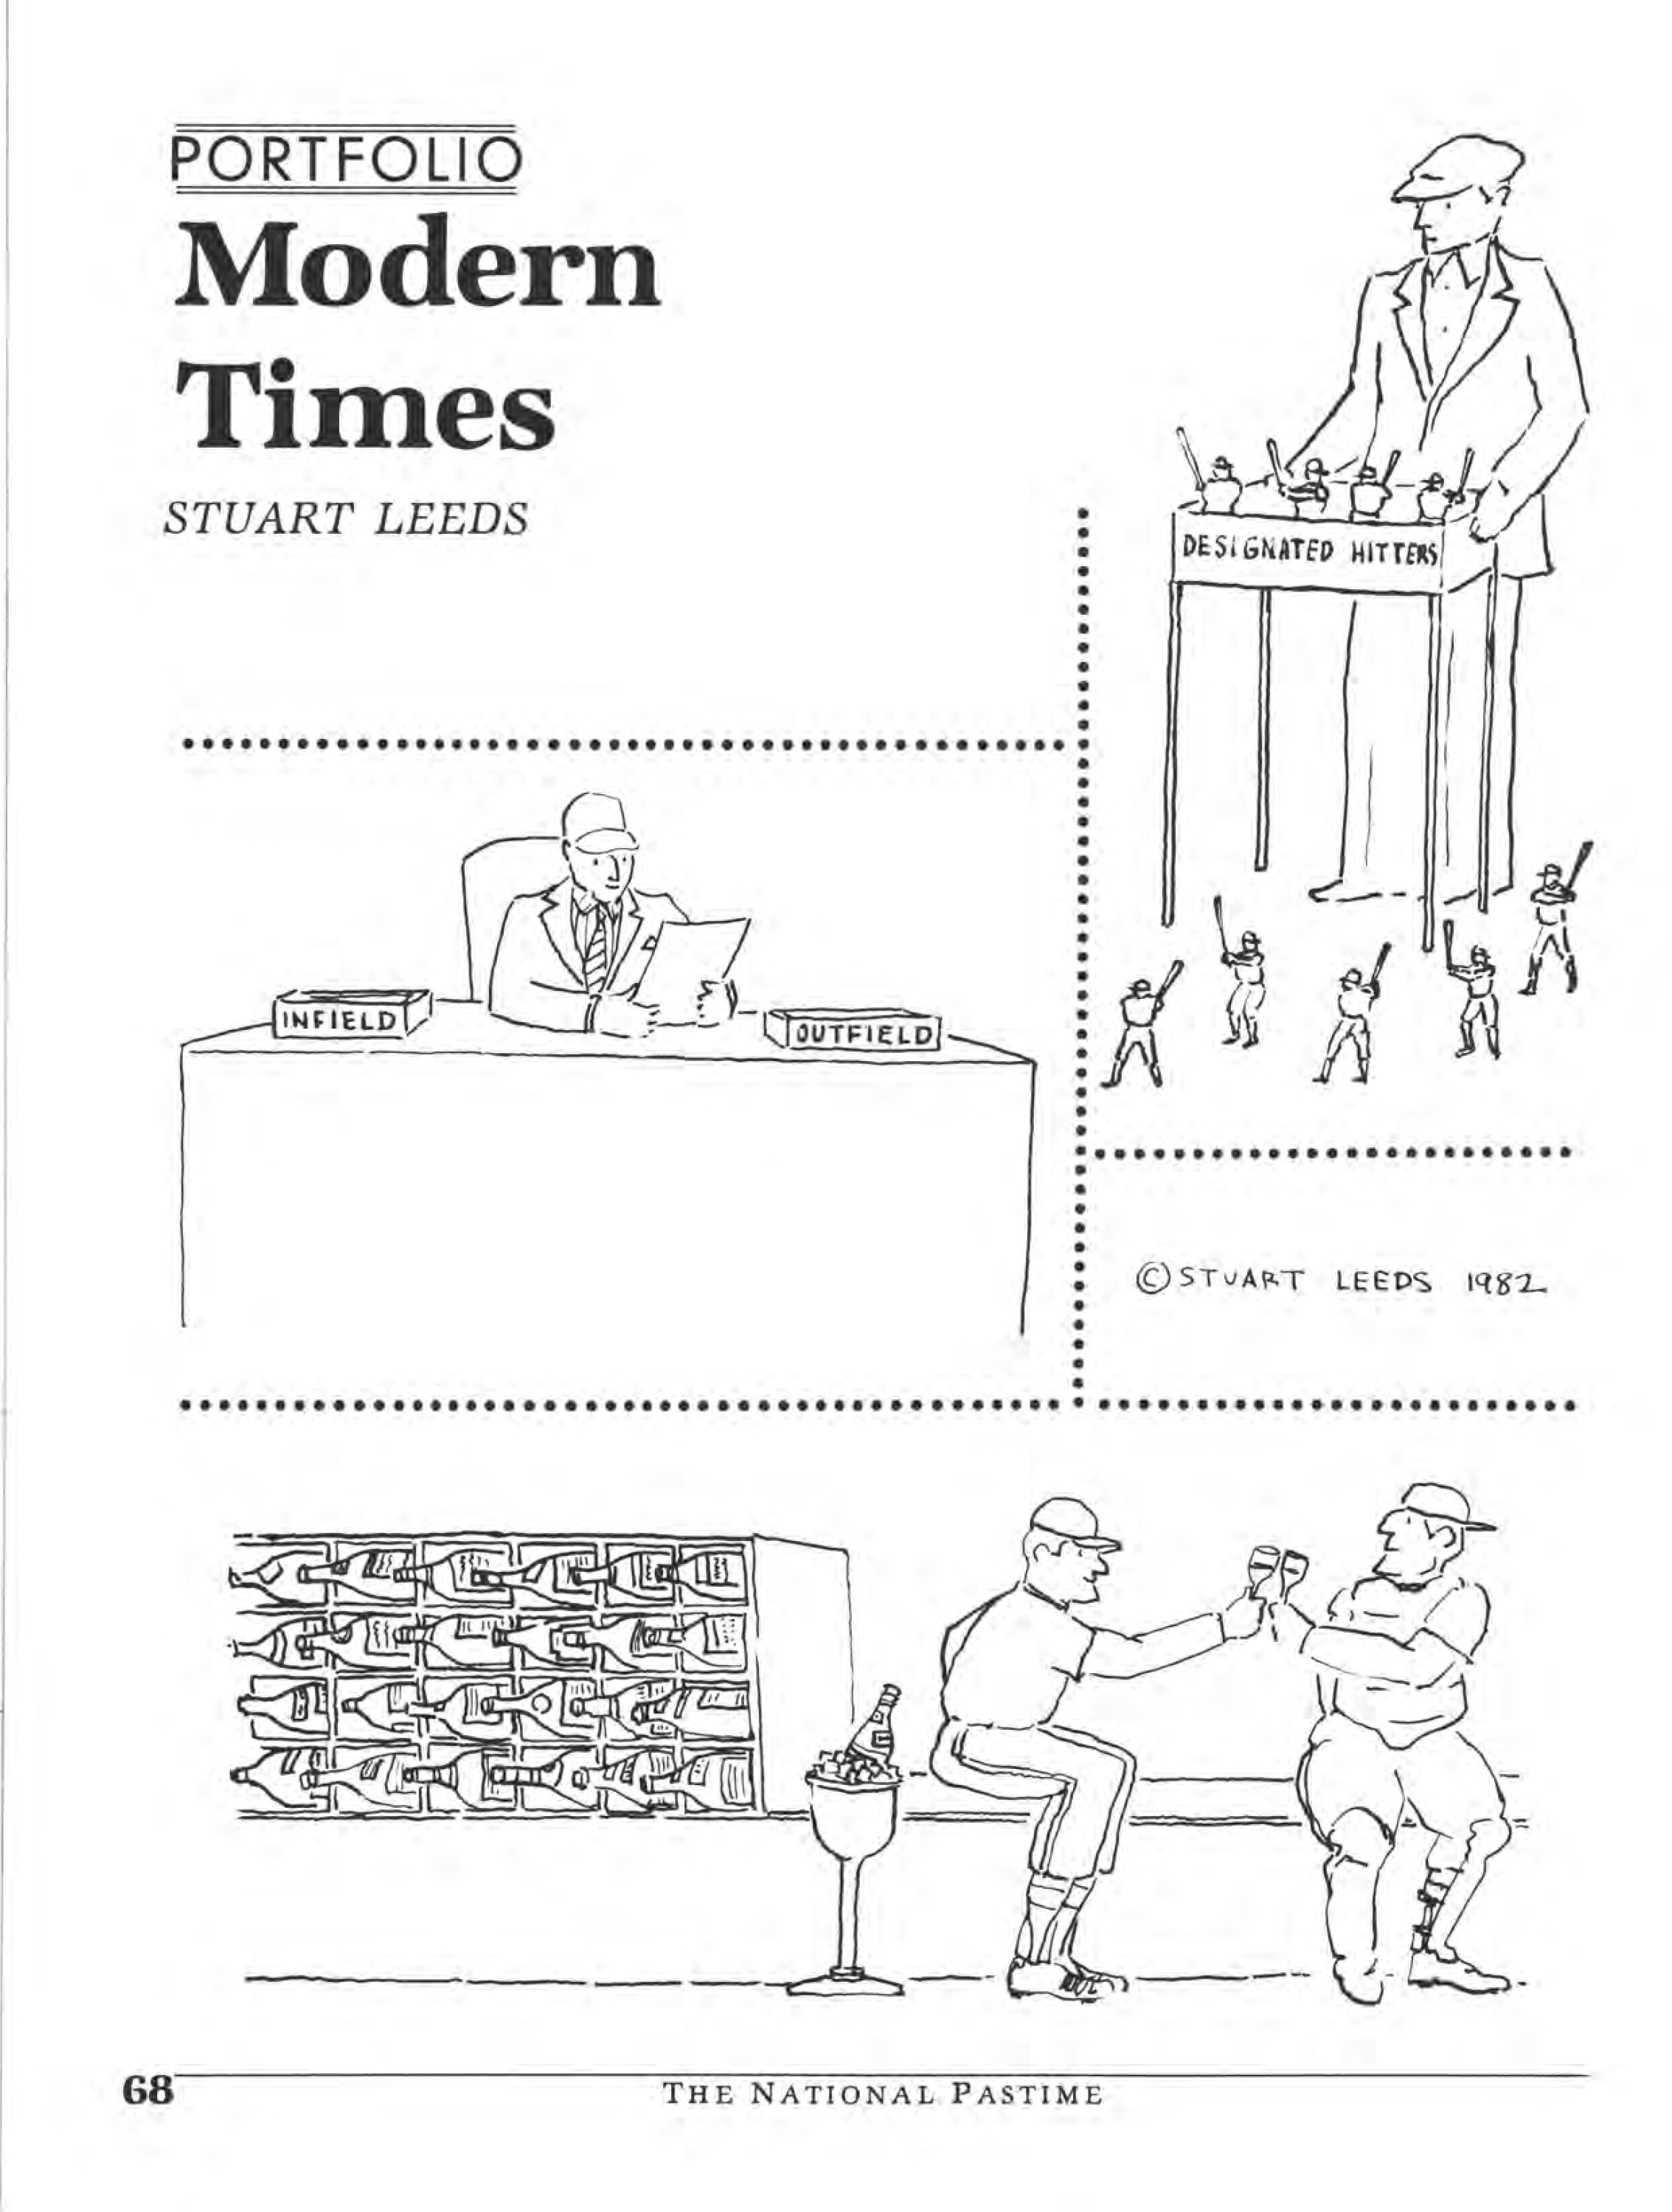 Stuart Leeds, "Modern Times," page 1